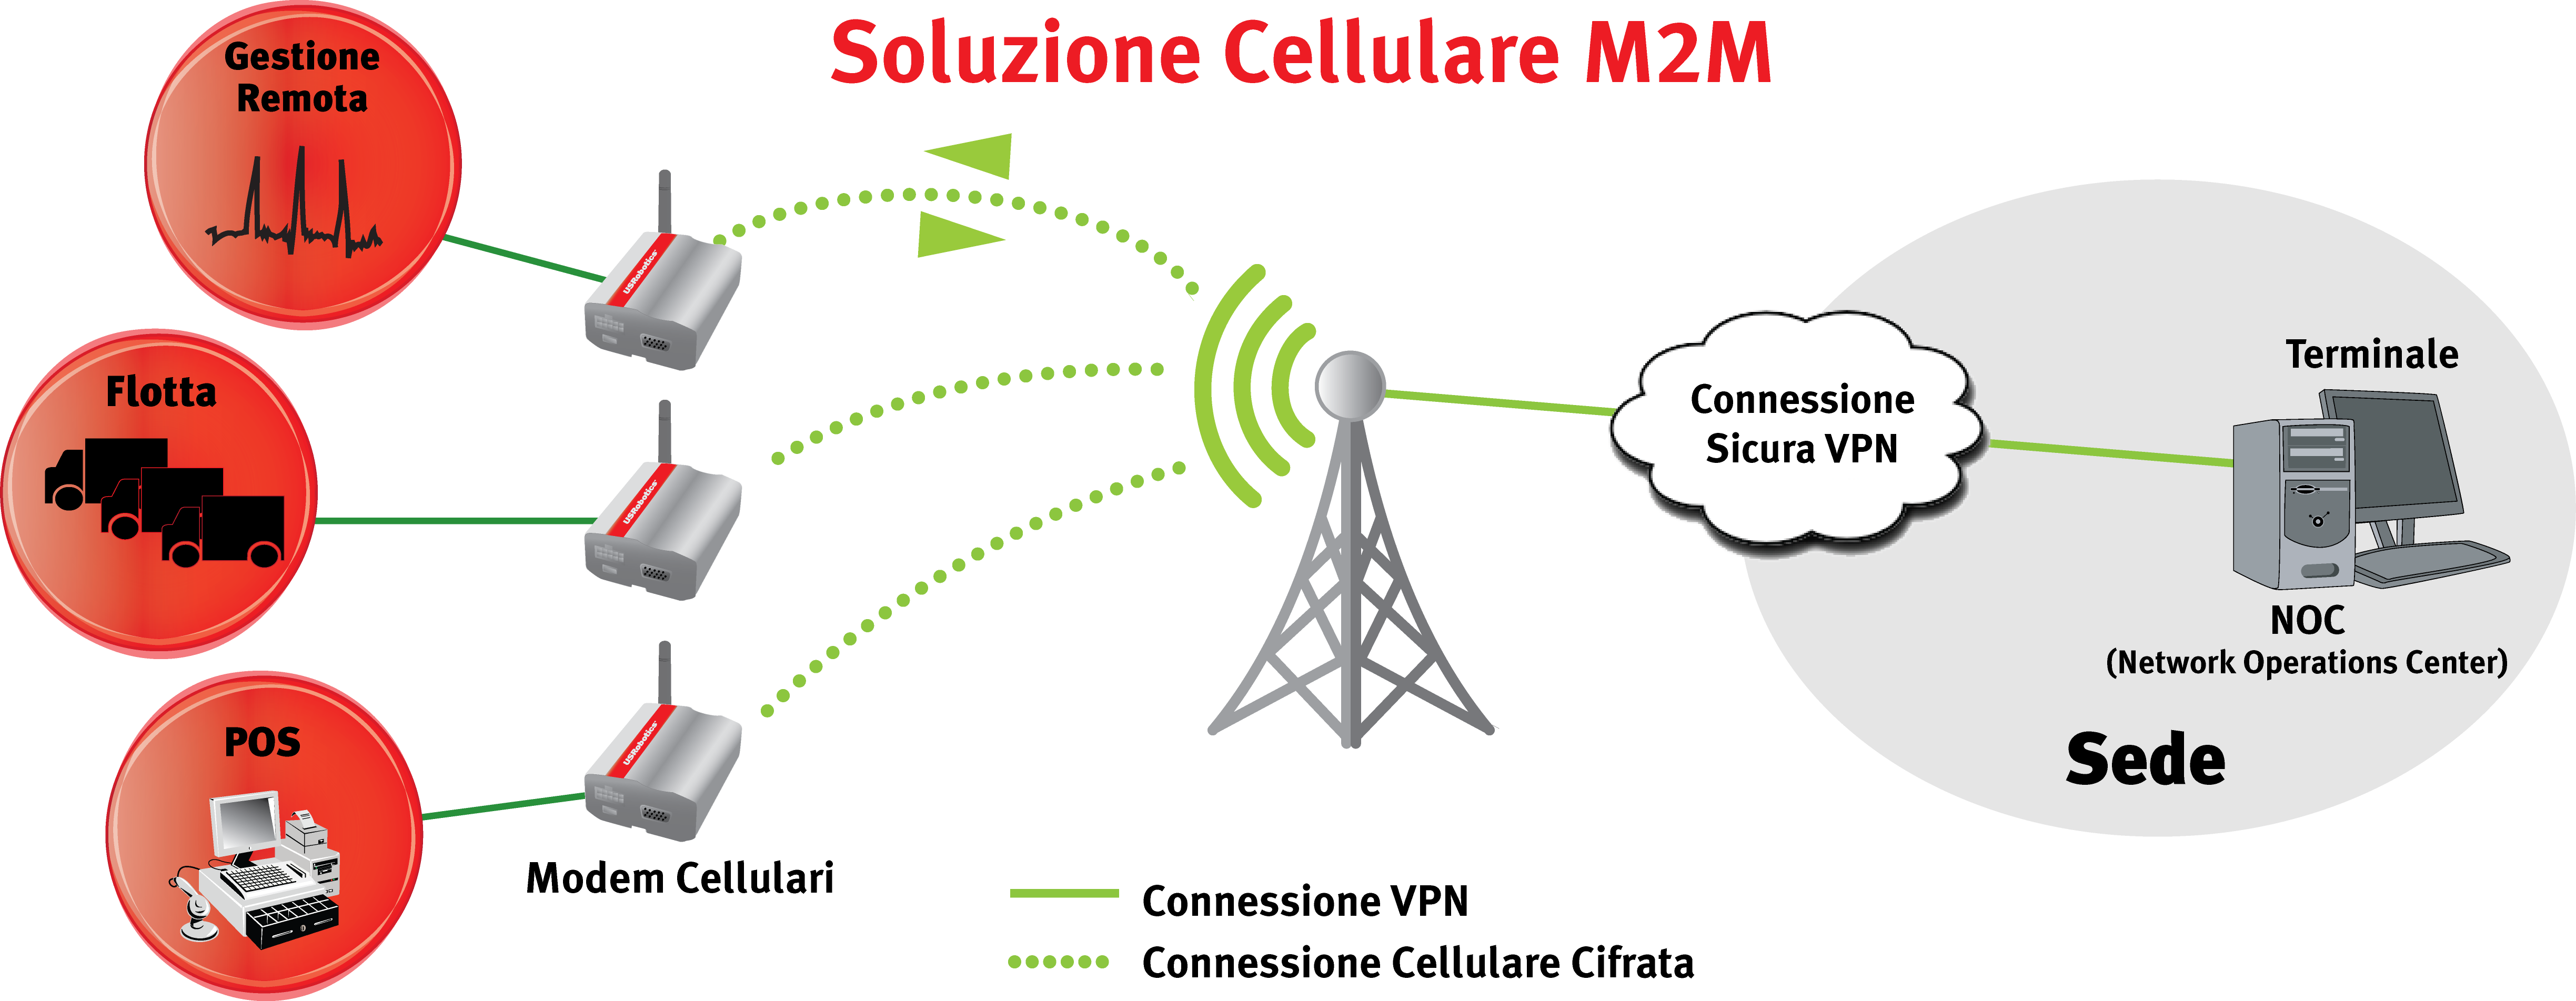 M2M Cellular solution with the USRobotics USR3500 Courier Modem